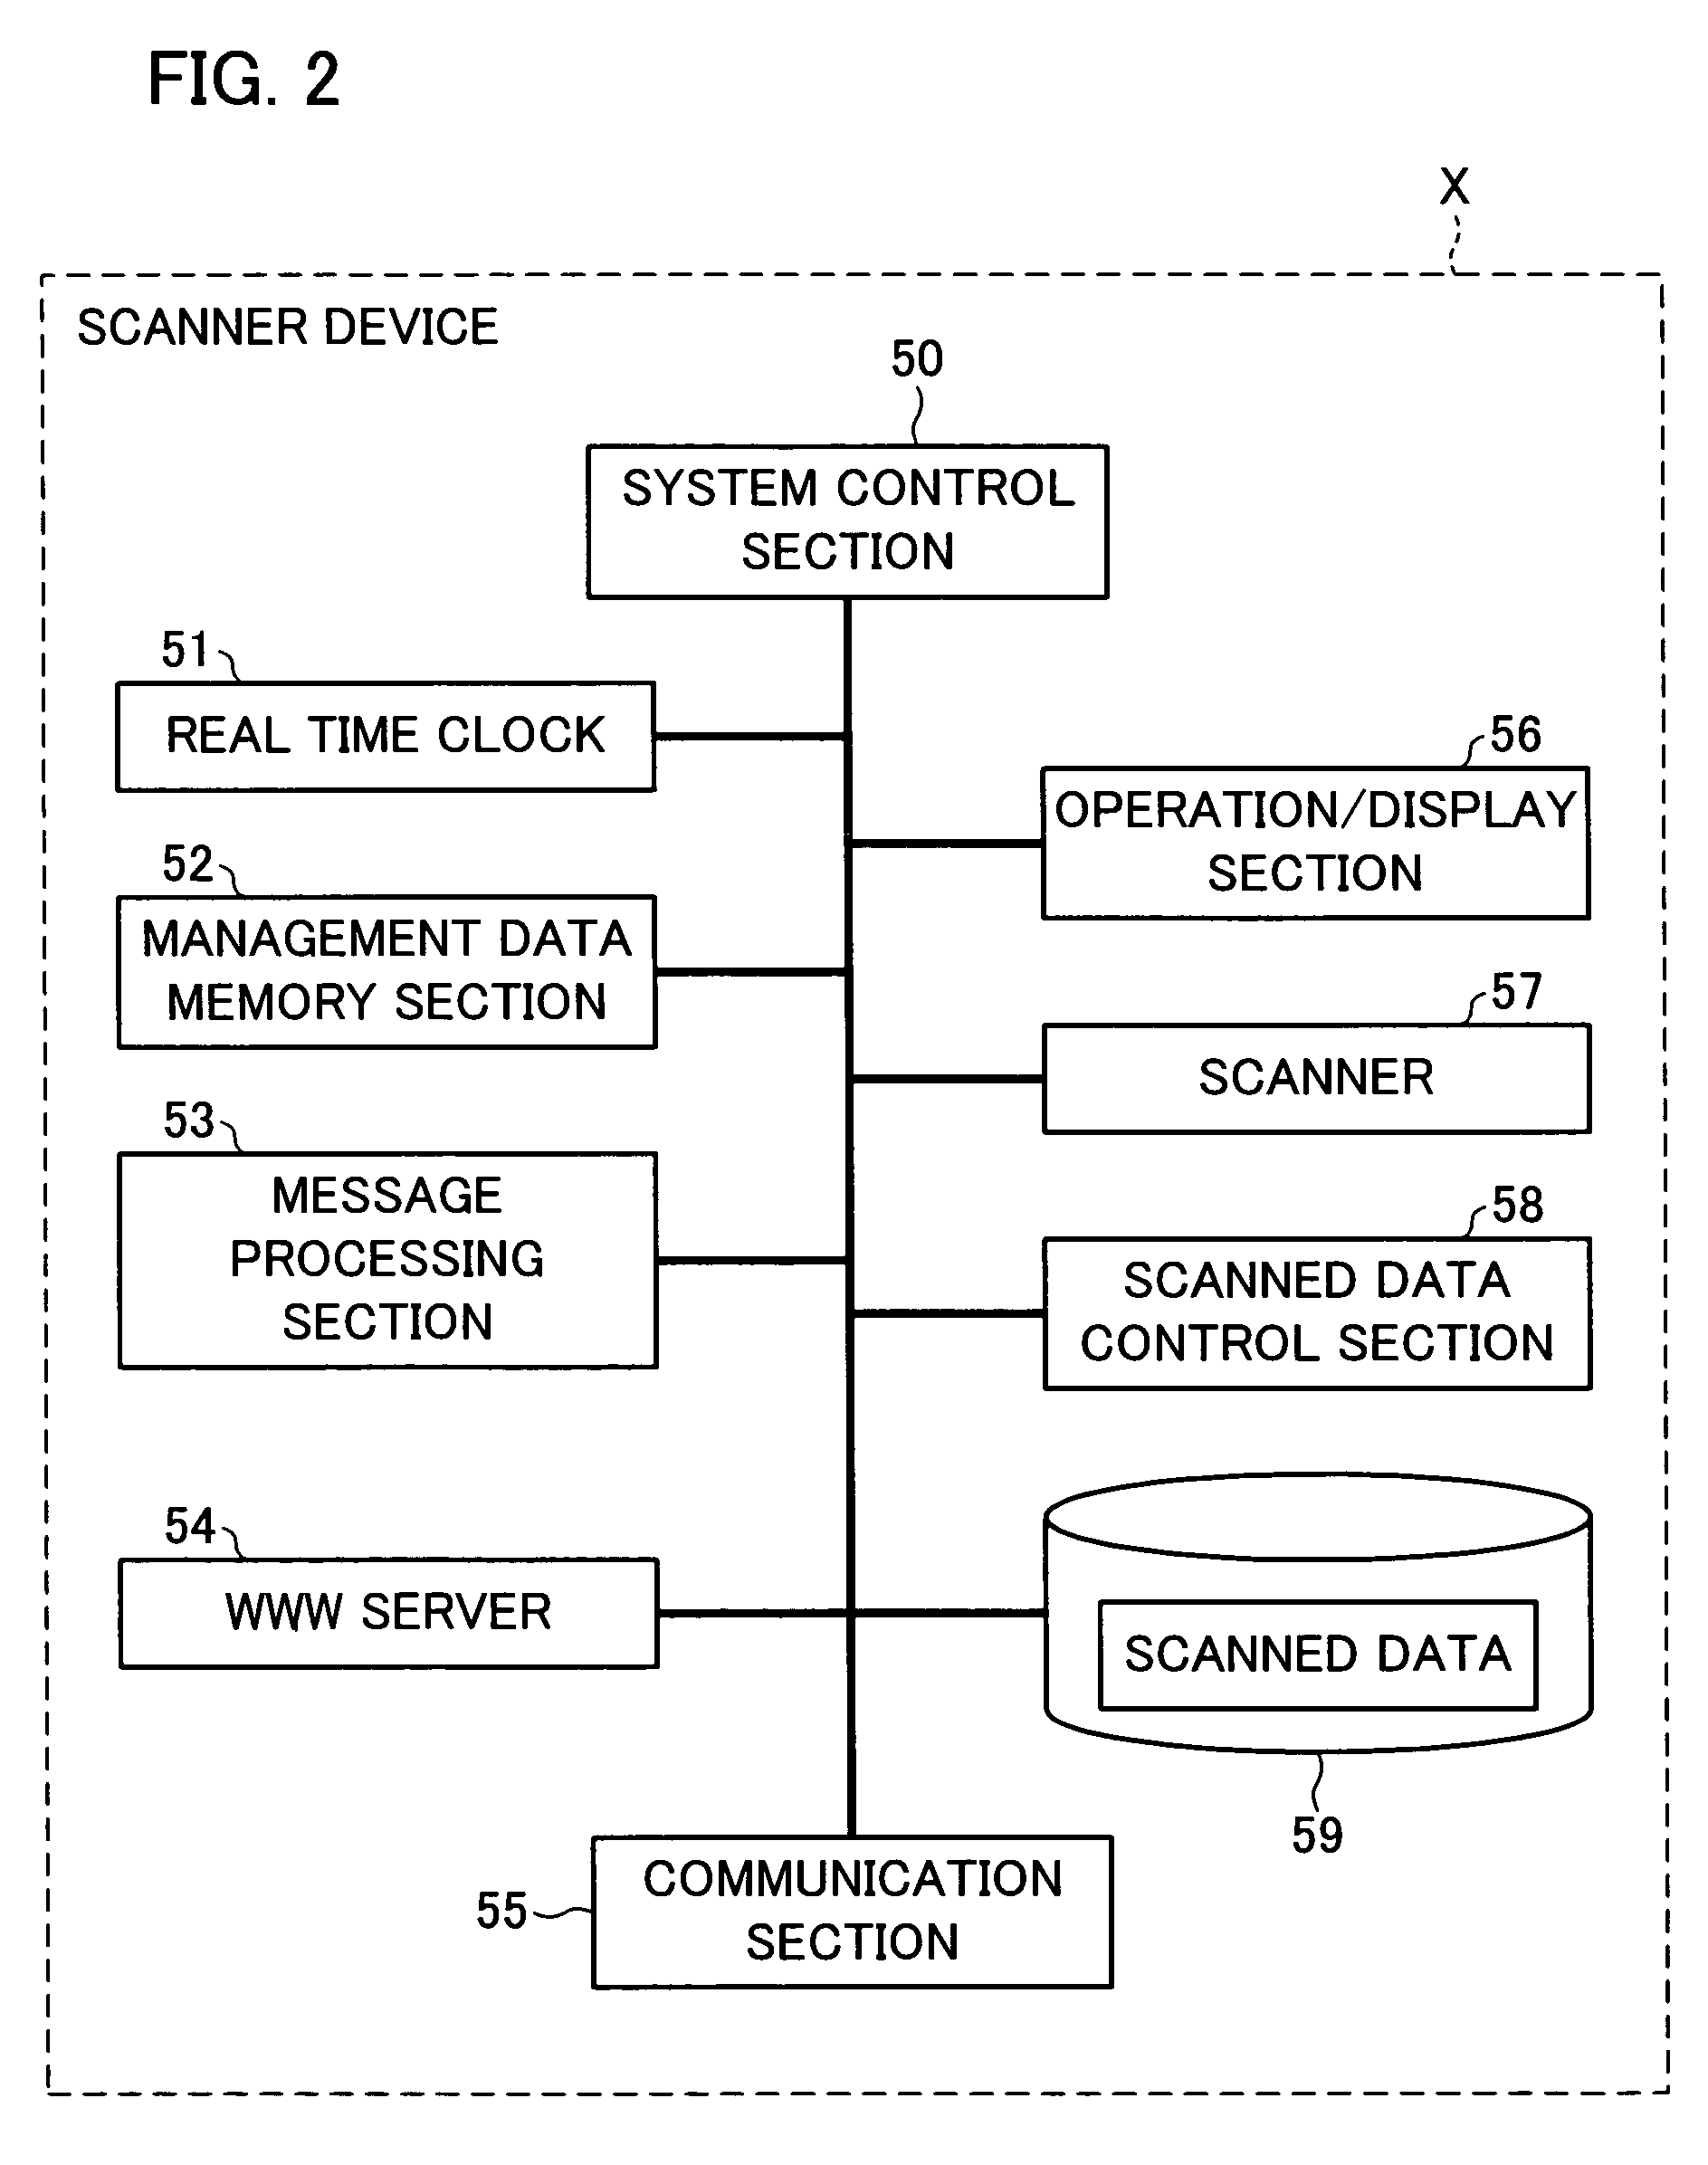 Network scanner